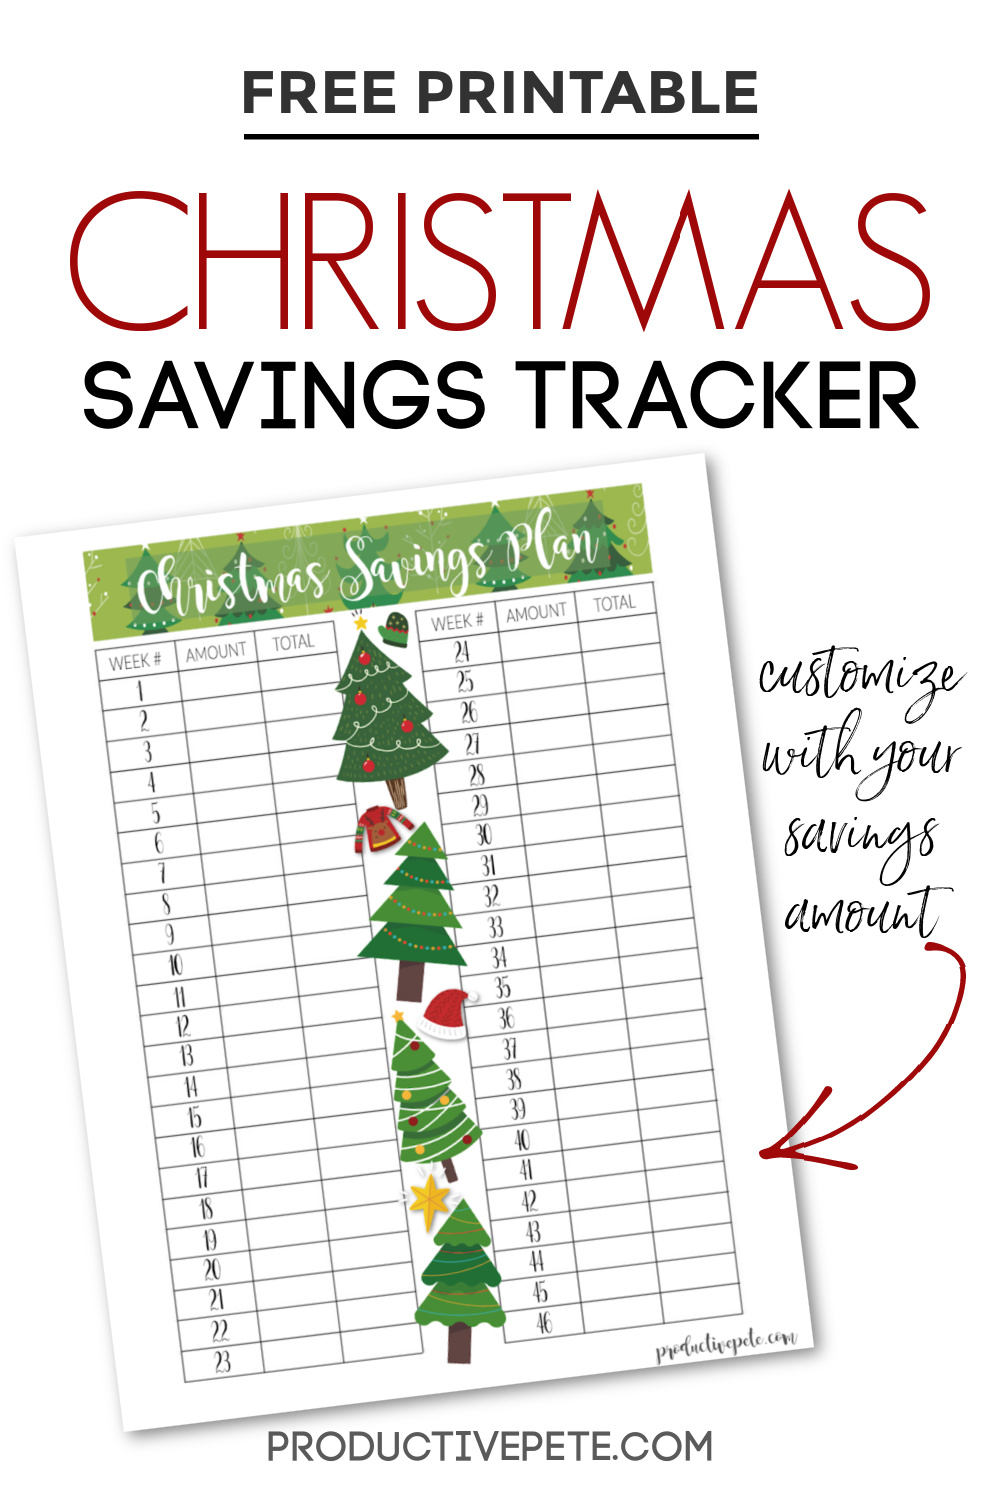 free-printable-christmas-savings-plan-tracker-you-can-customize-productive-pete